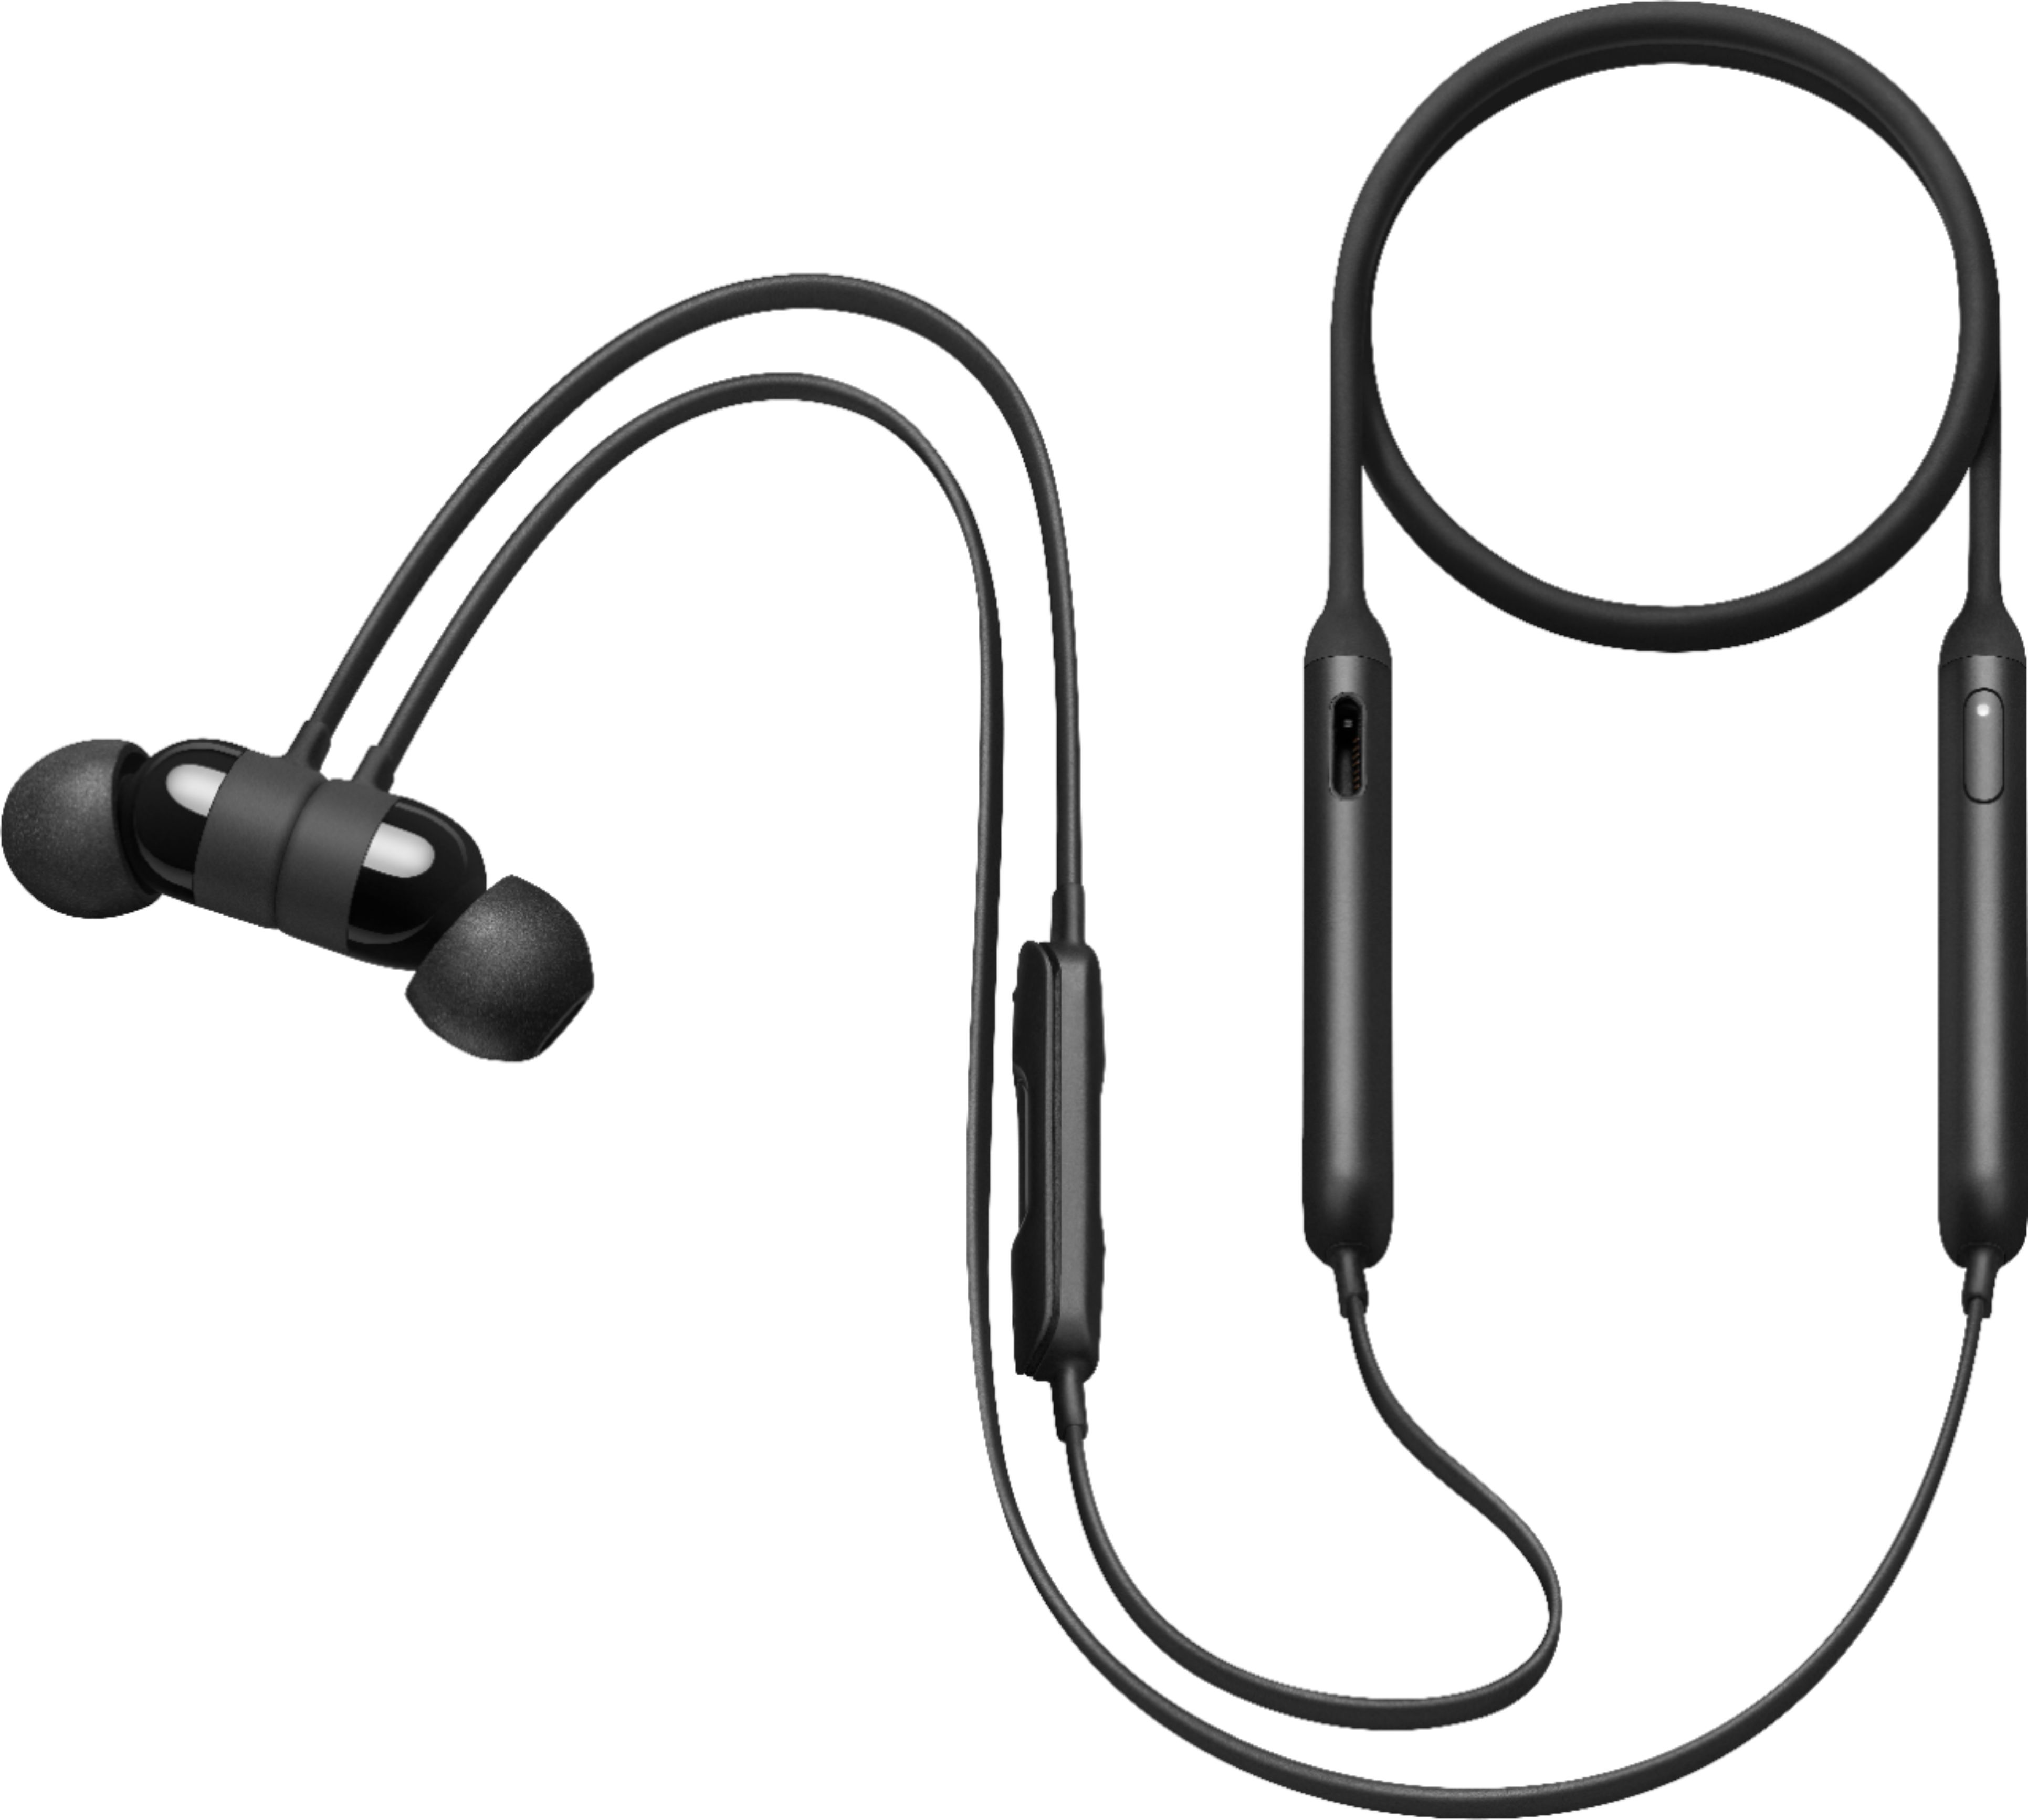 beatsx wireless earbuds